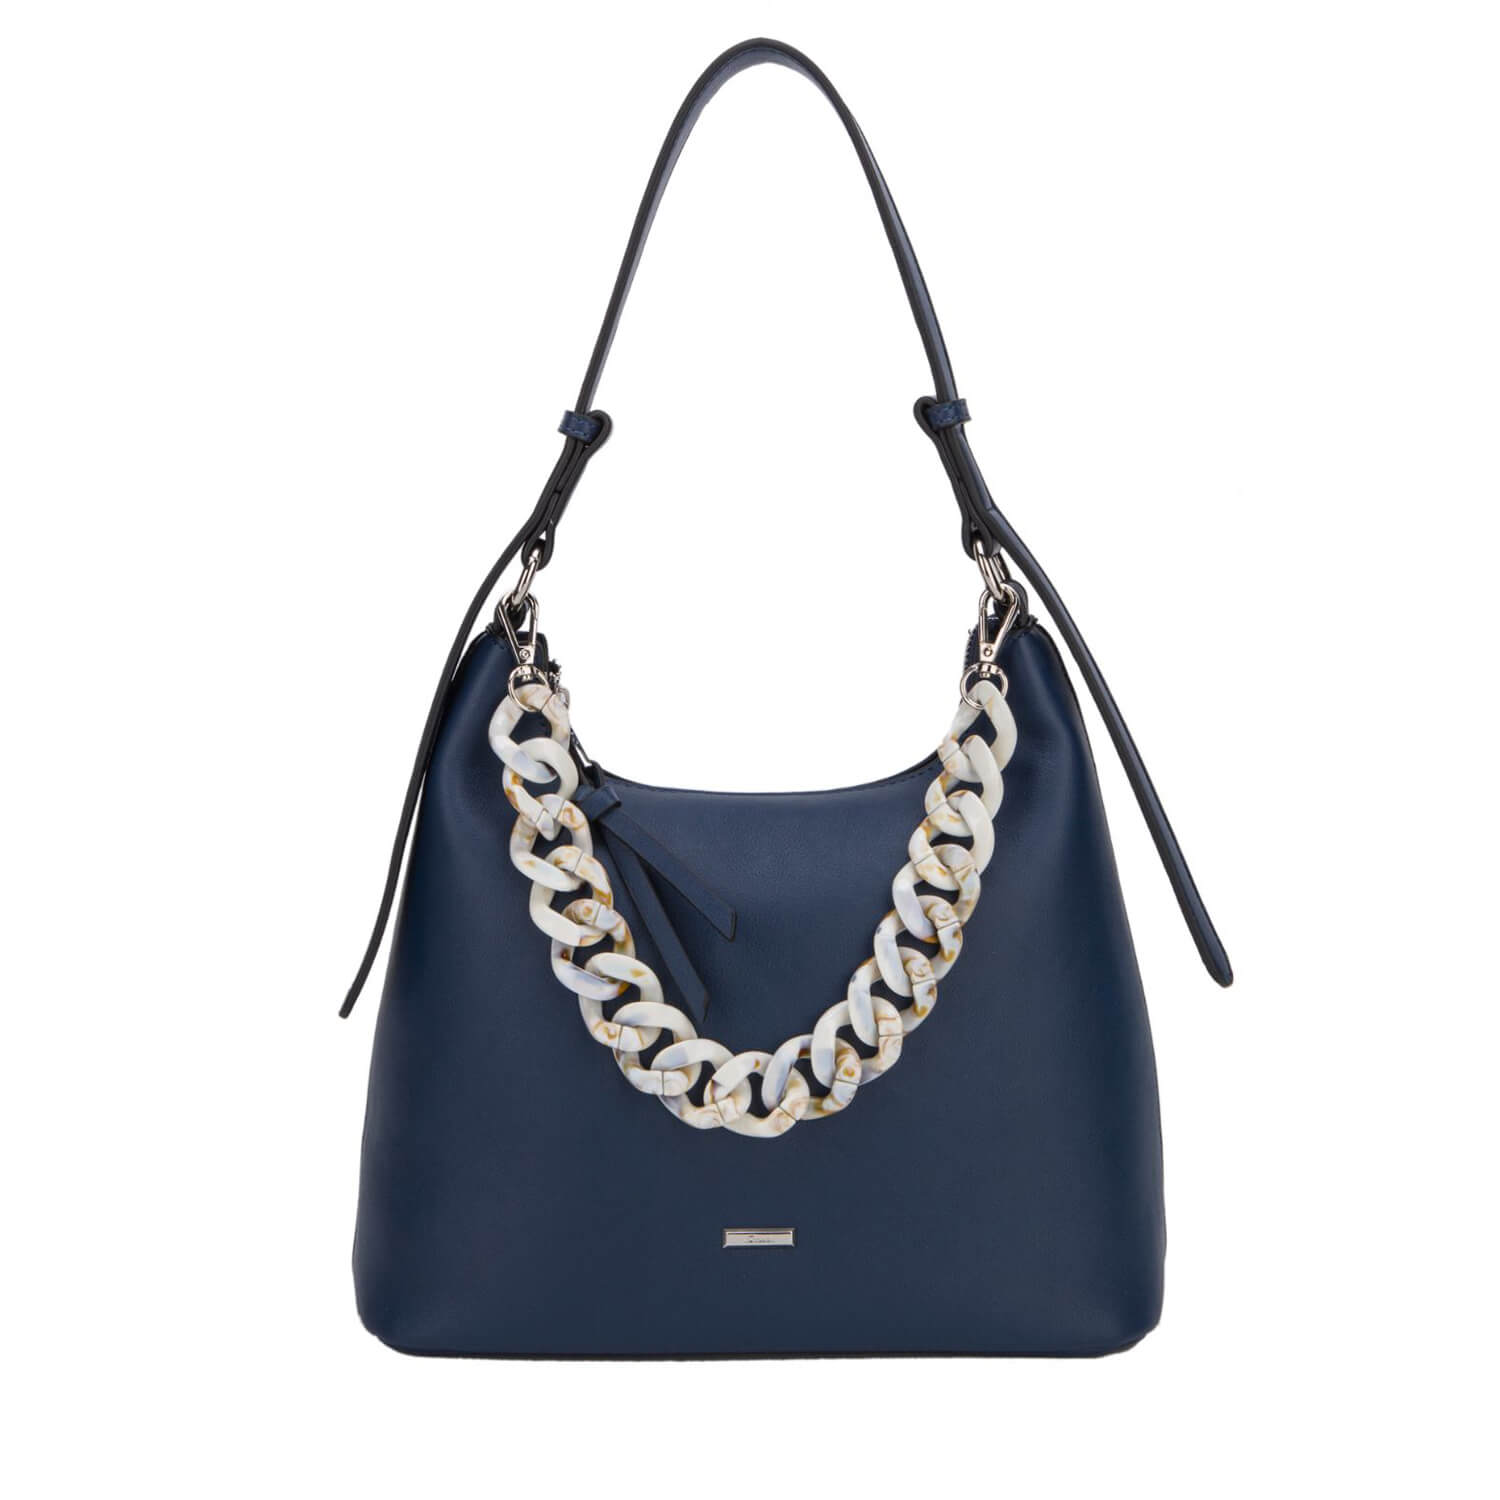 Gionni Saona Soft Hobo Handbag With Chain - Navy 1 Shaws Department Stores